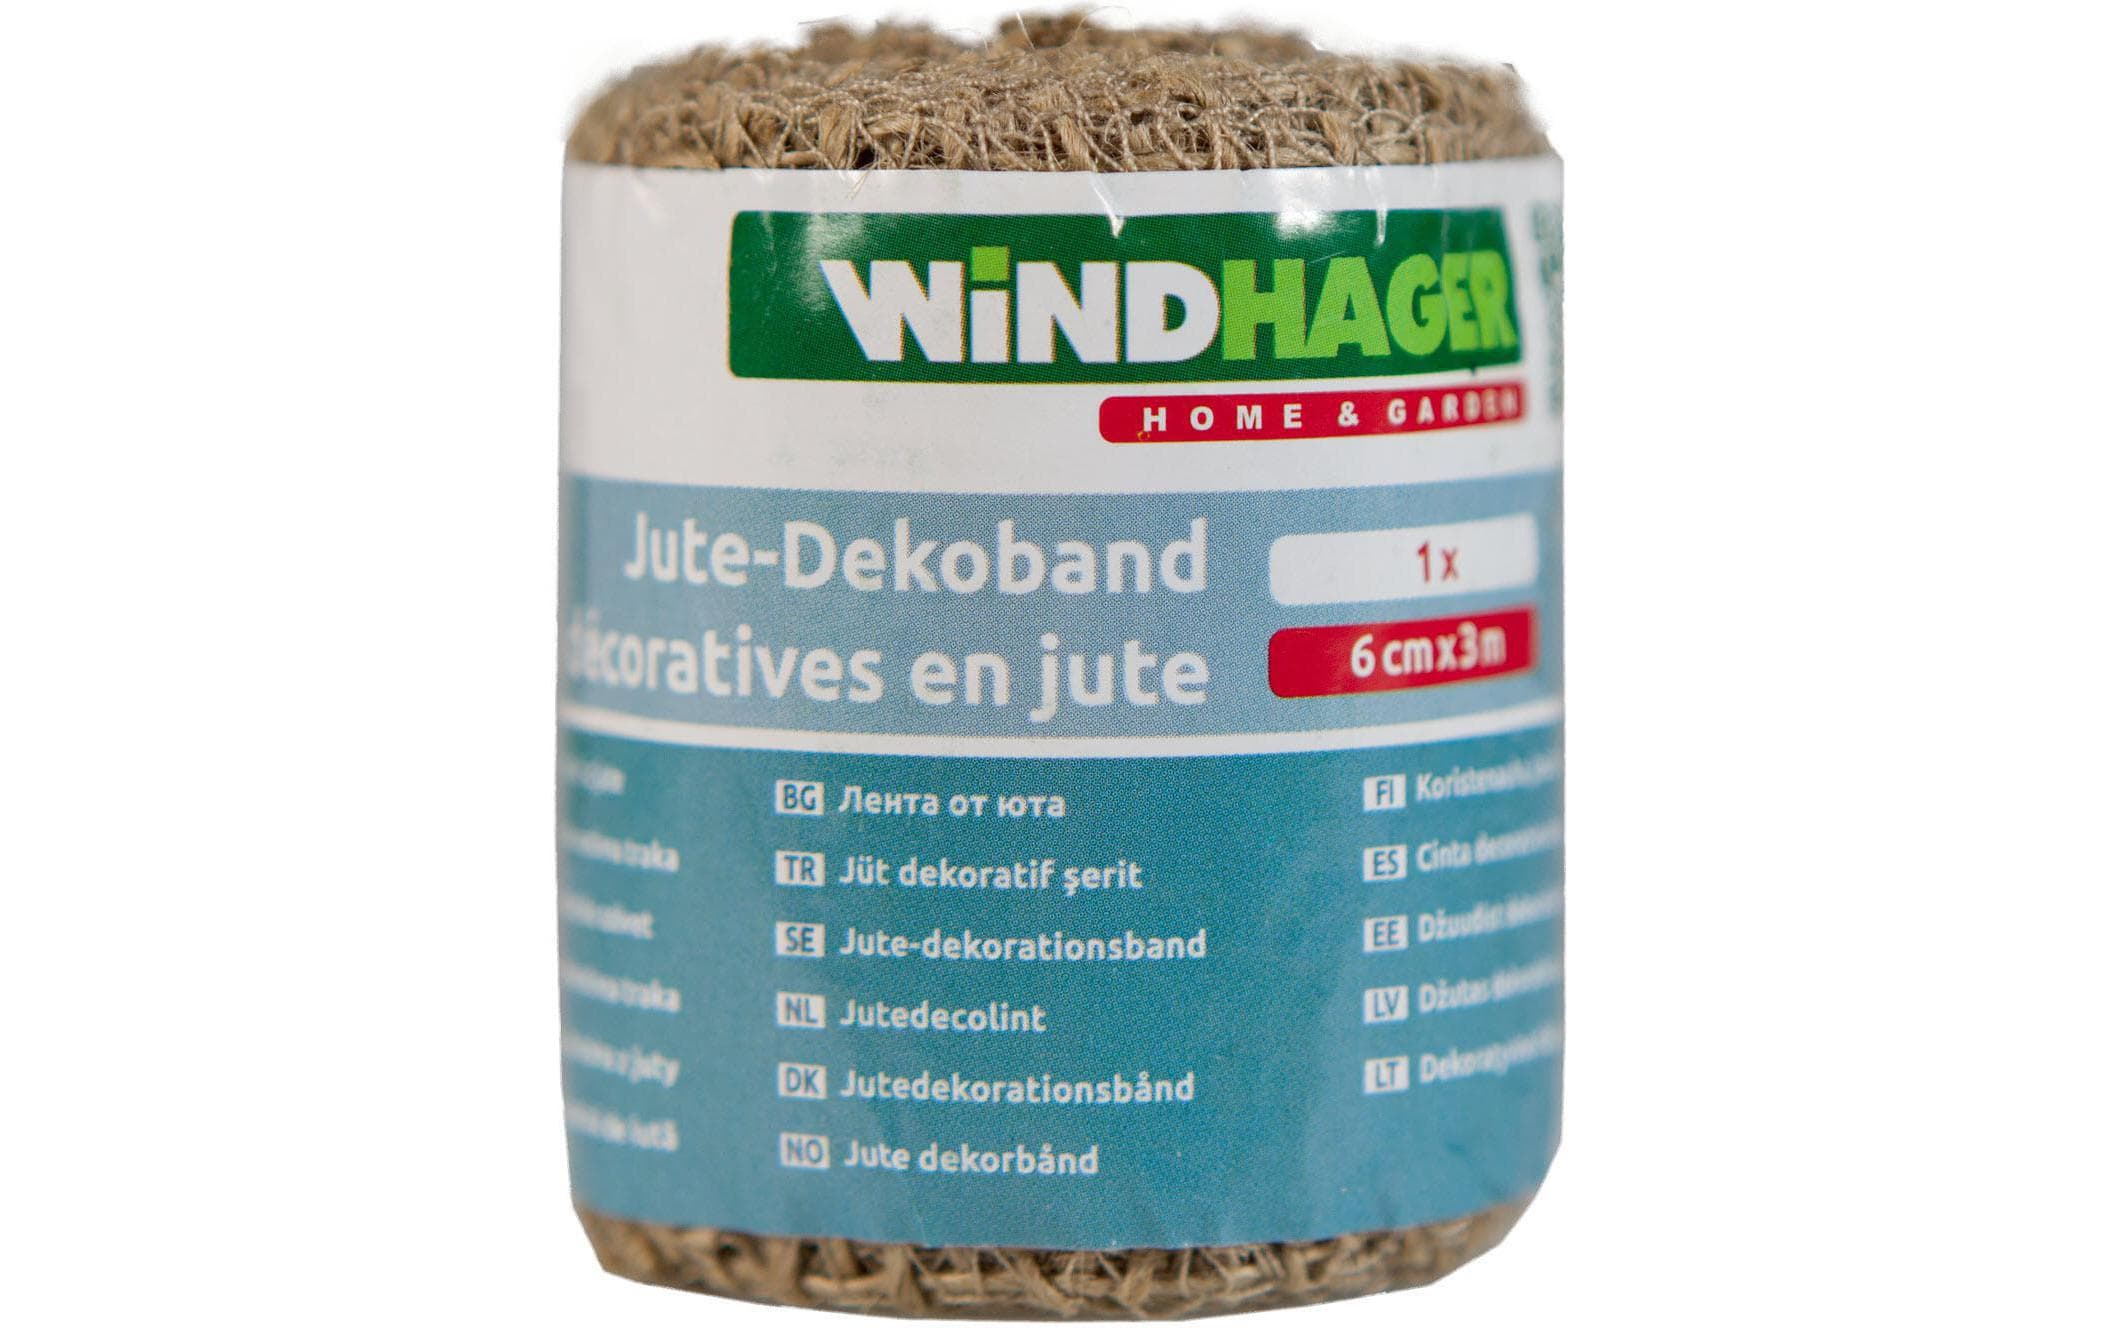 Windhager Jute-Dekoband, nature